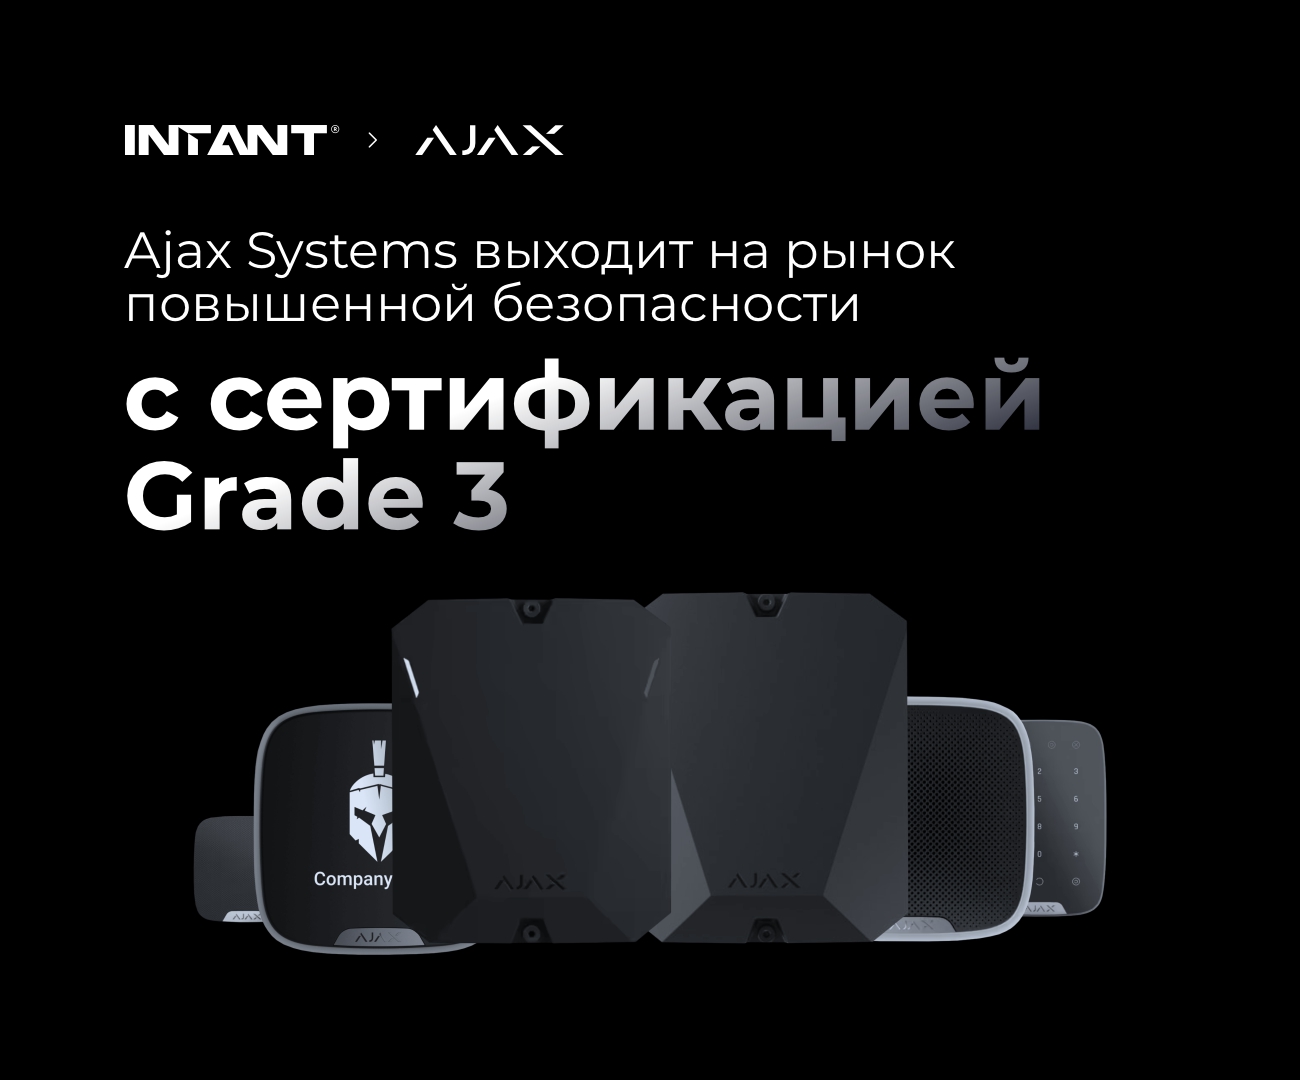 Ajax Systems сертифицированы по классу безопасности Grade 3<